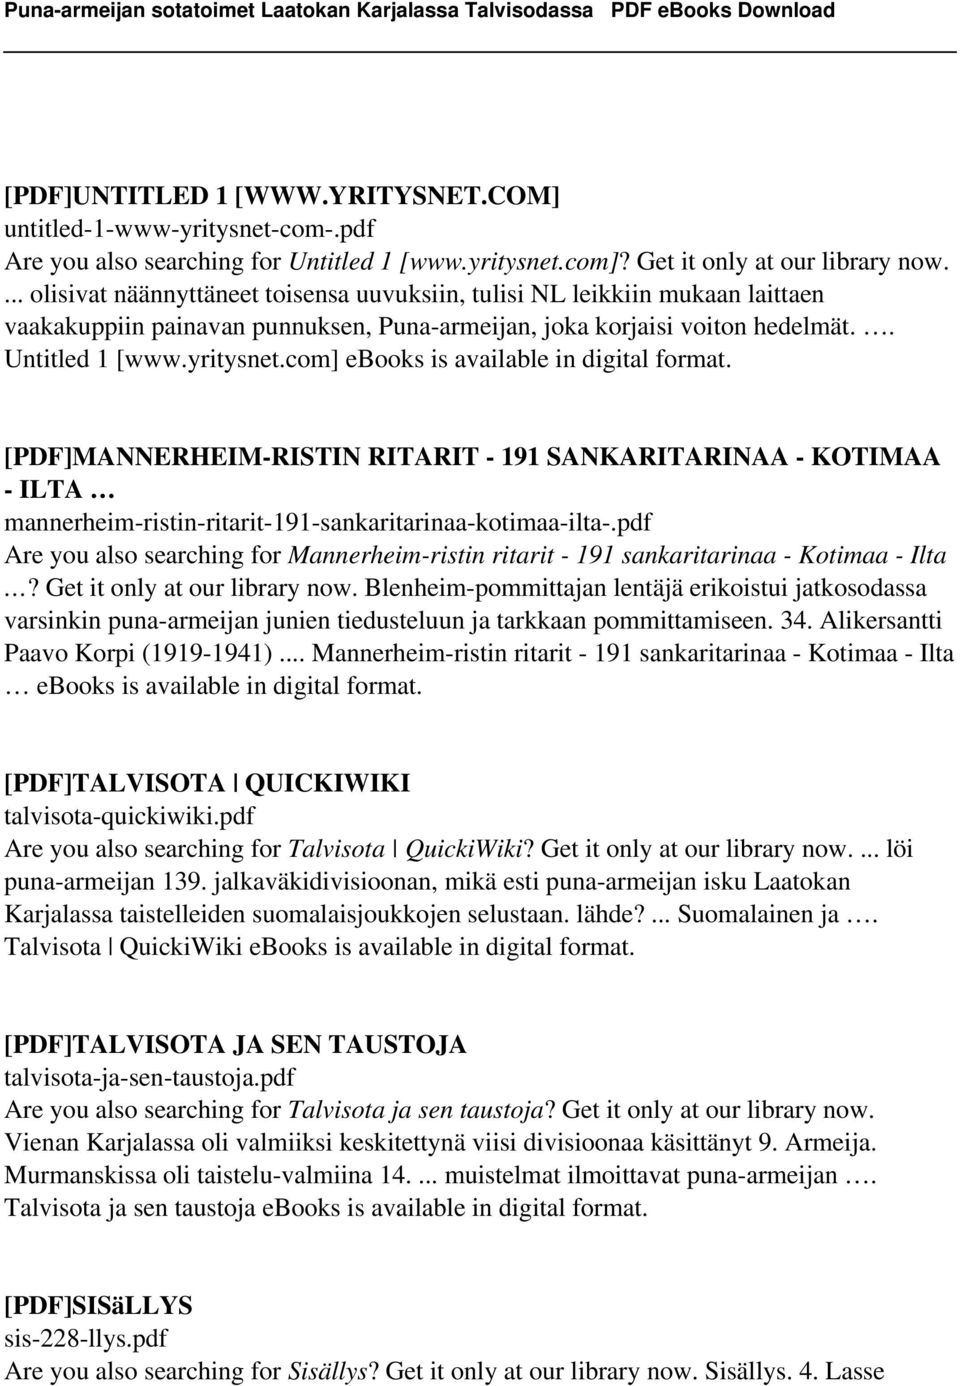 com] ebooks is available in digital format. [PDF]MANNERHEIM-RISTIN RITARIT - 191 SANKARITARINAA - KOTIMAA - ILTA mannerheim-ristin-ritarit-191-sankaritarinaa-kotimaa-ilta-.